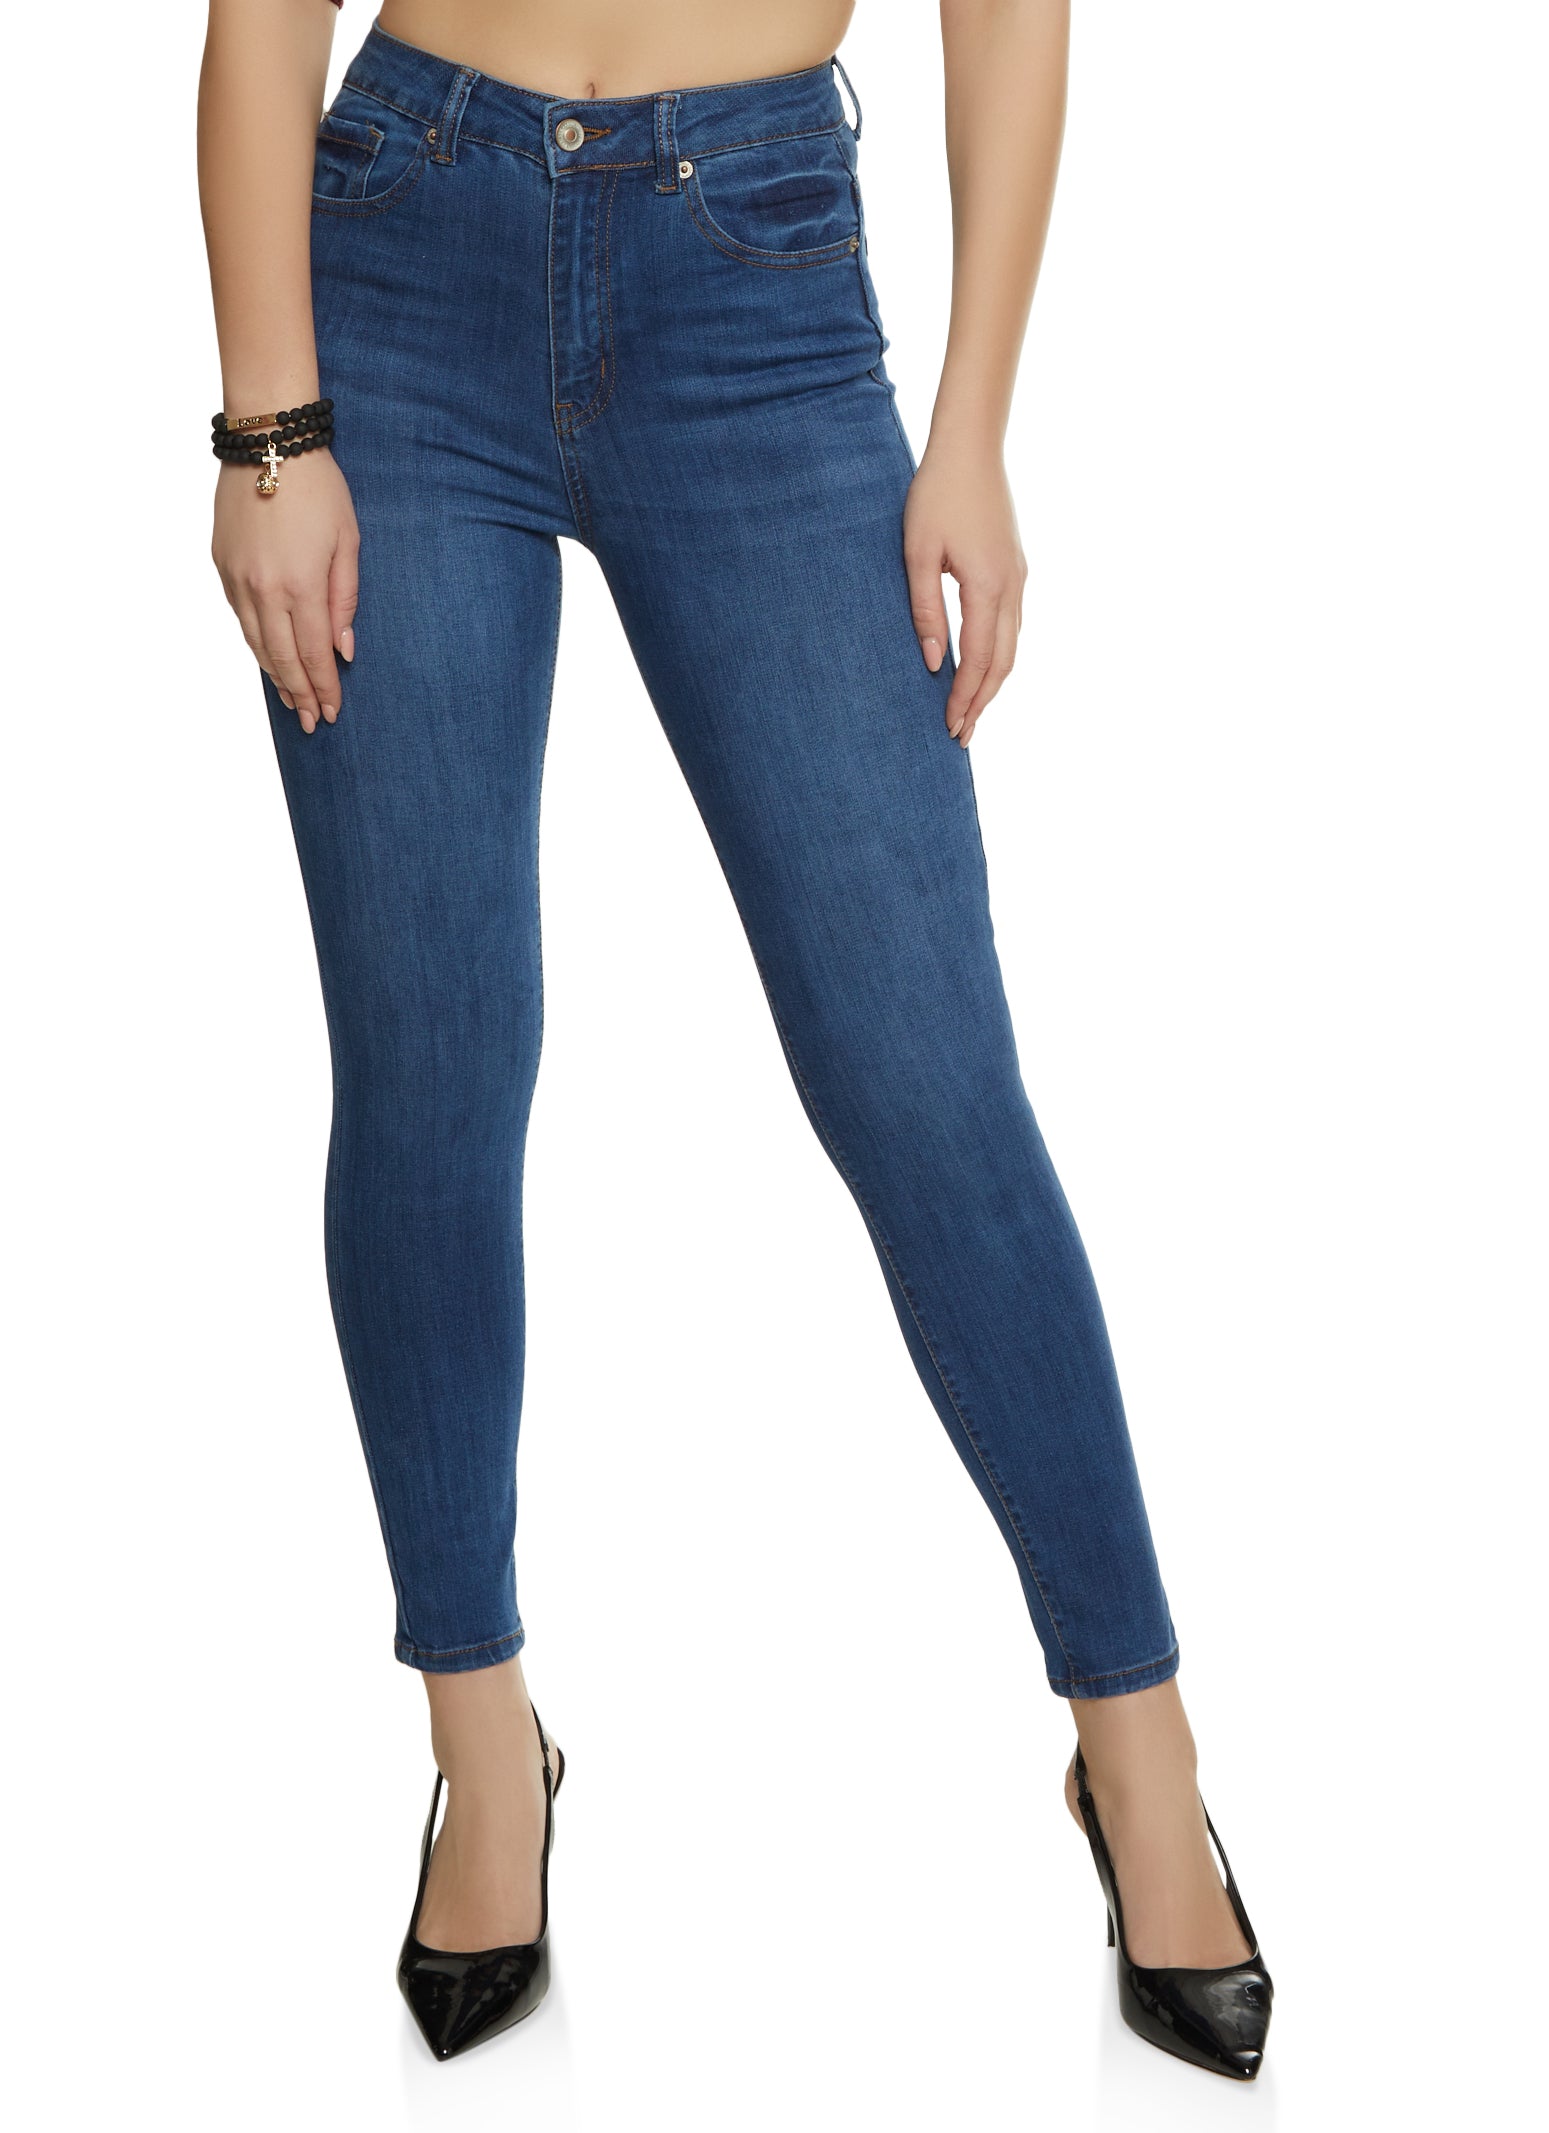 Jeans for Women Pants for Women Women's Jeans High Waist Flap